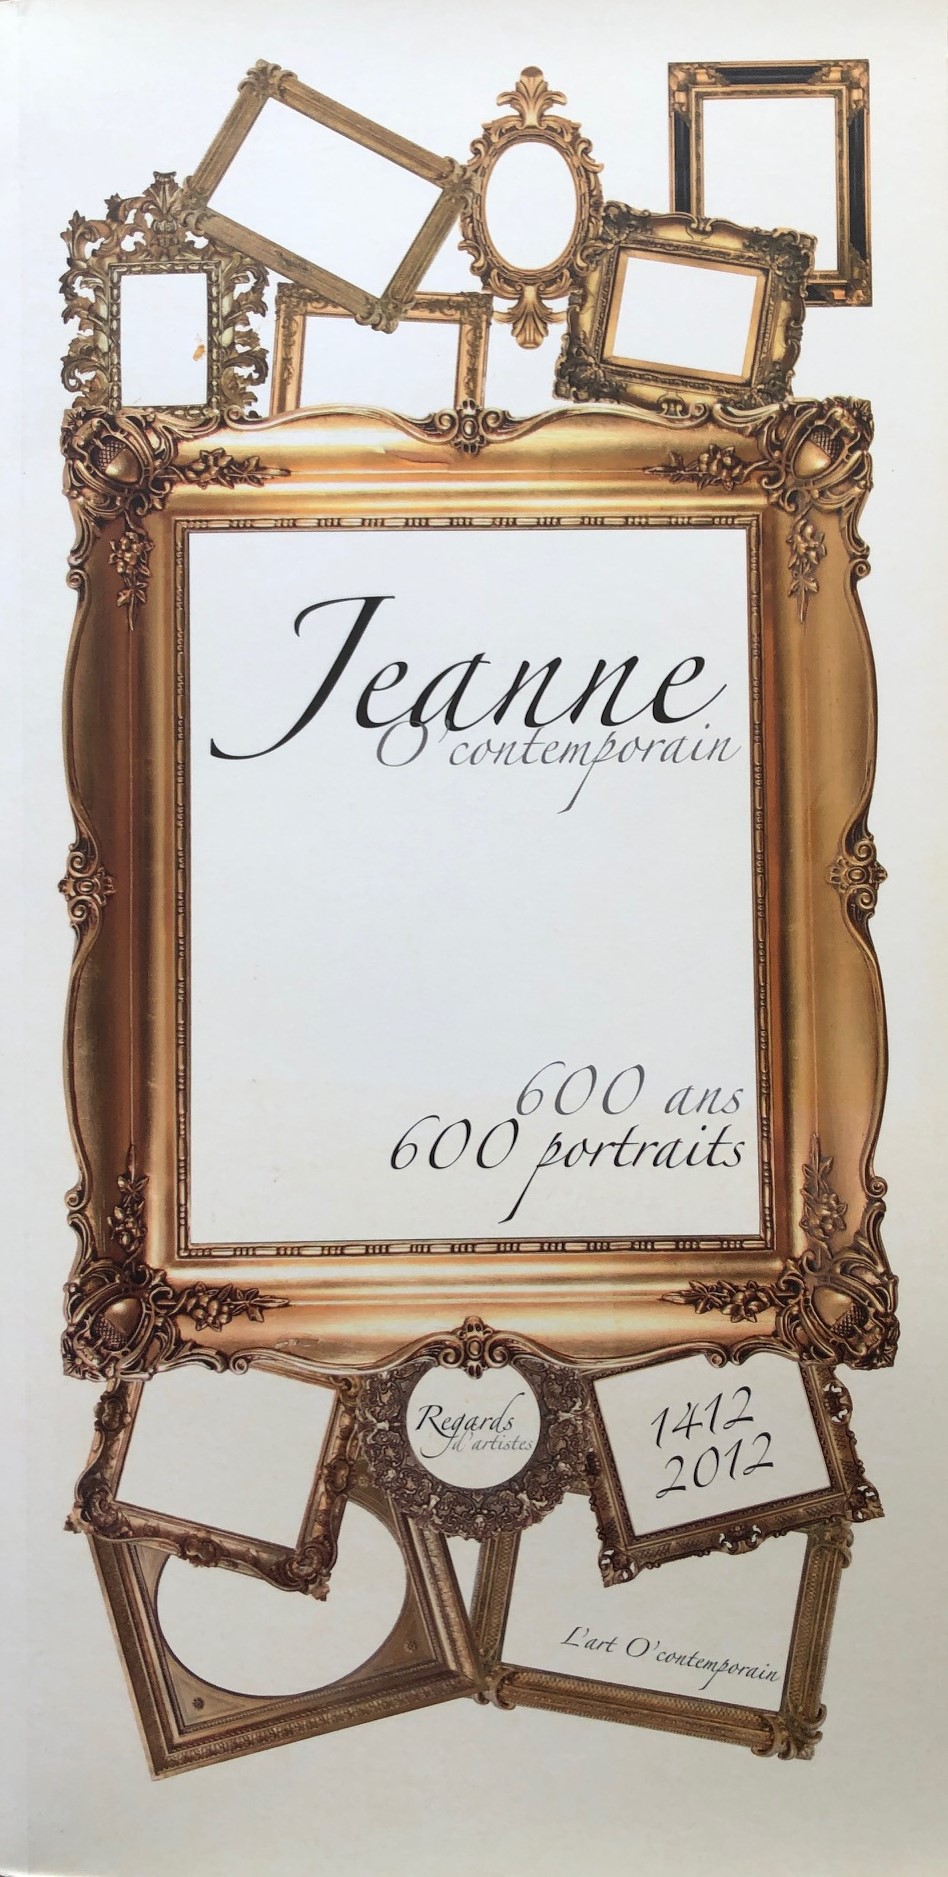 Collectif Jeanne O contemporain IMG_1115